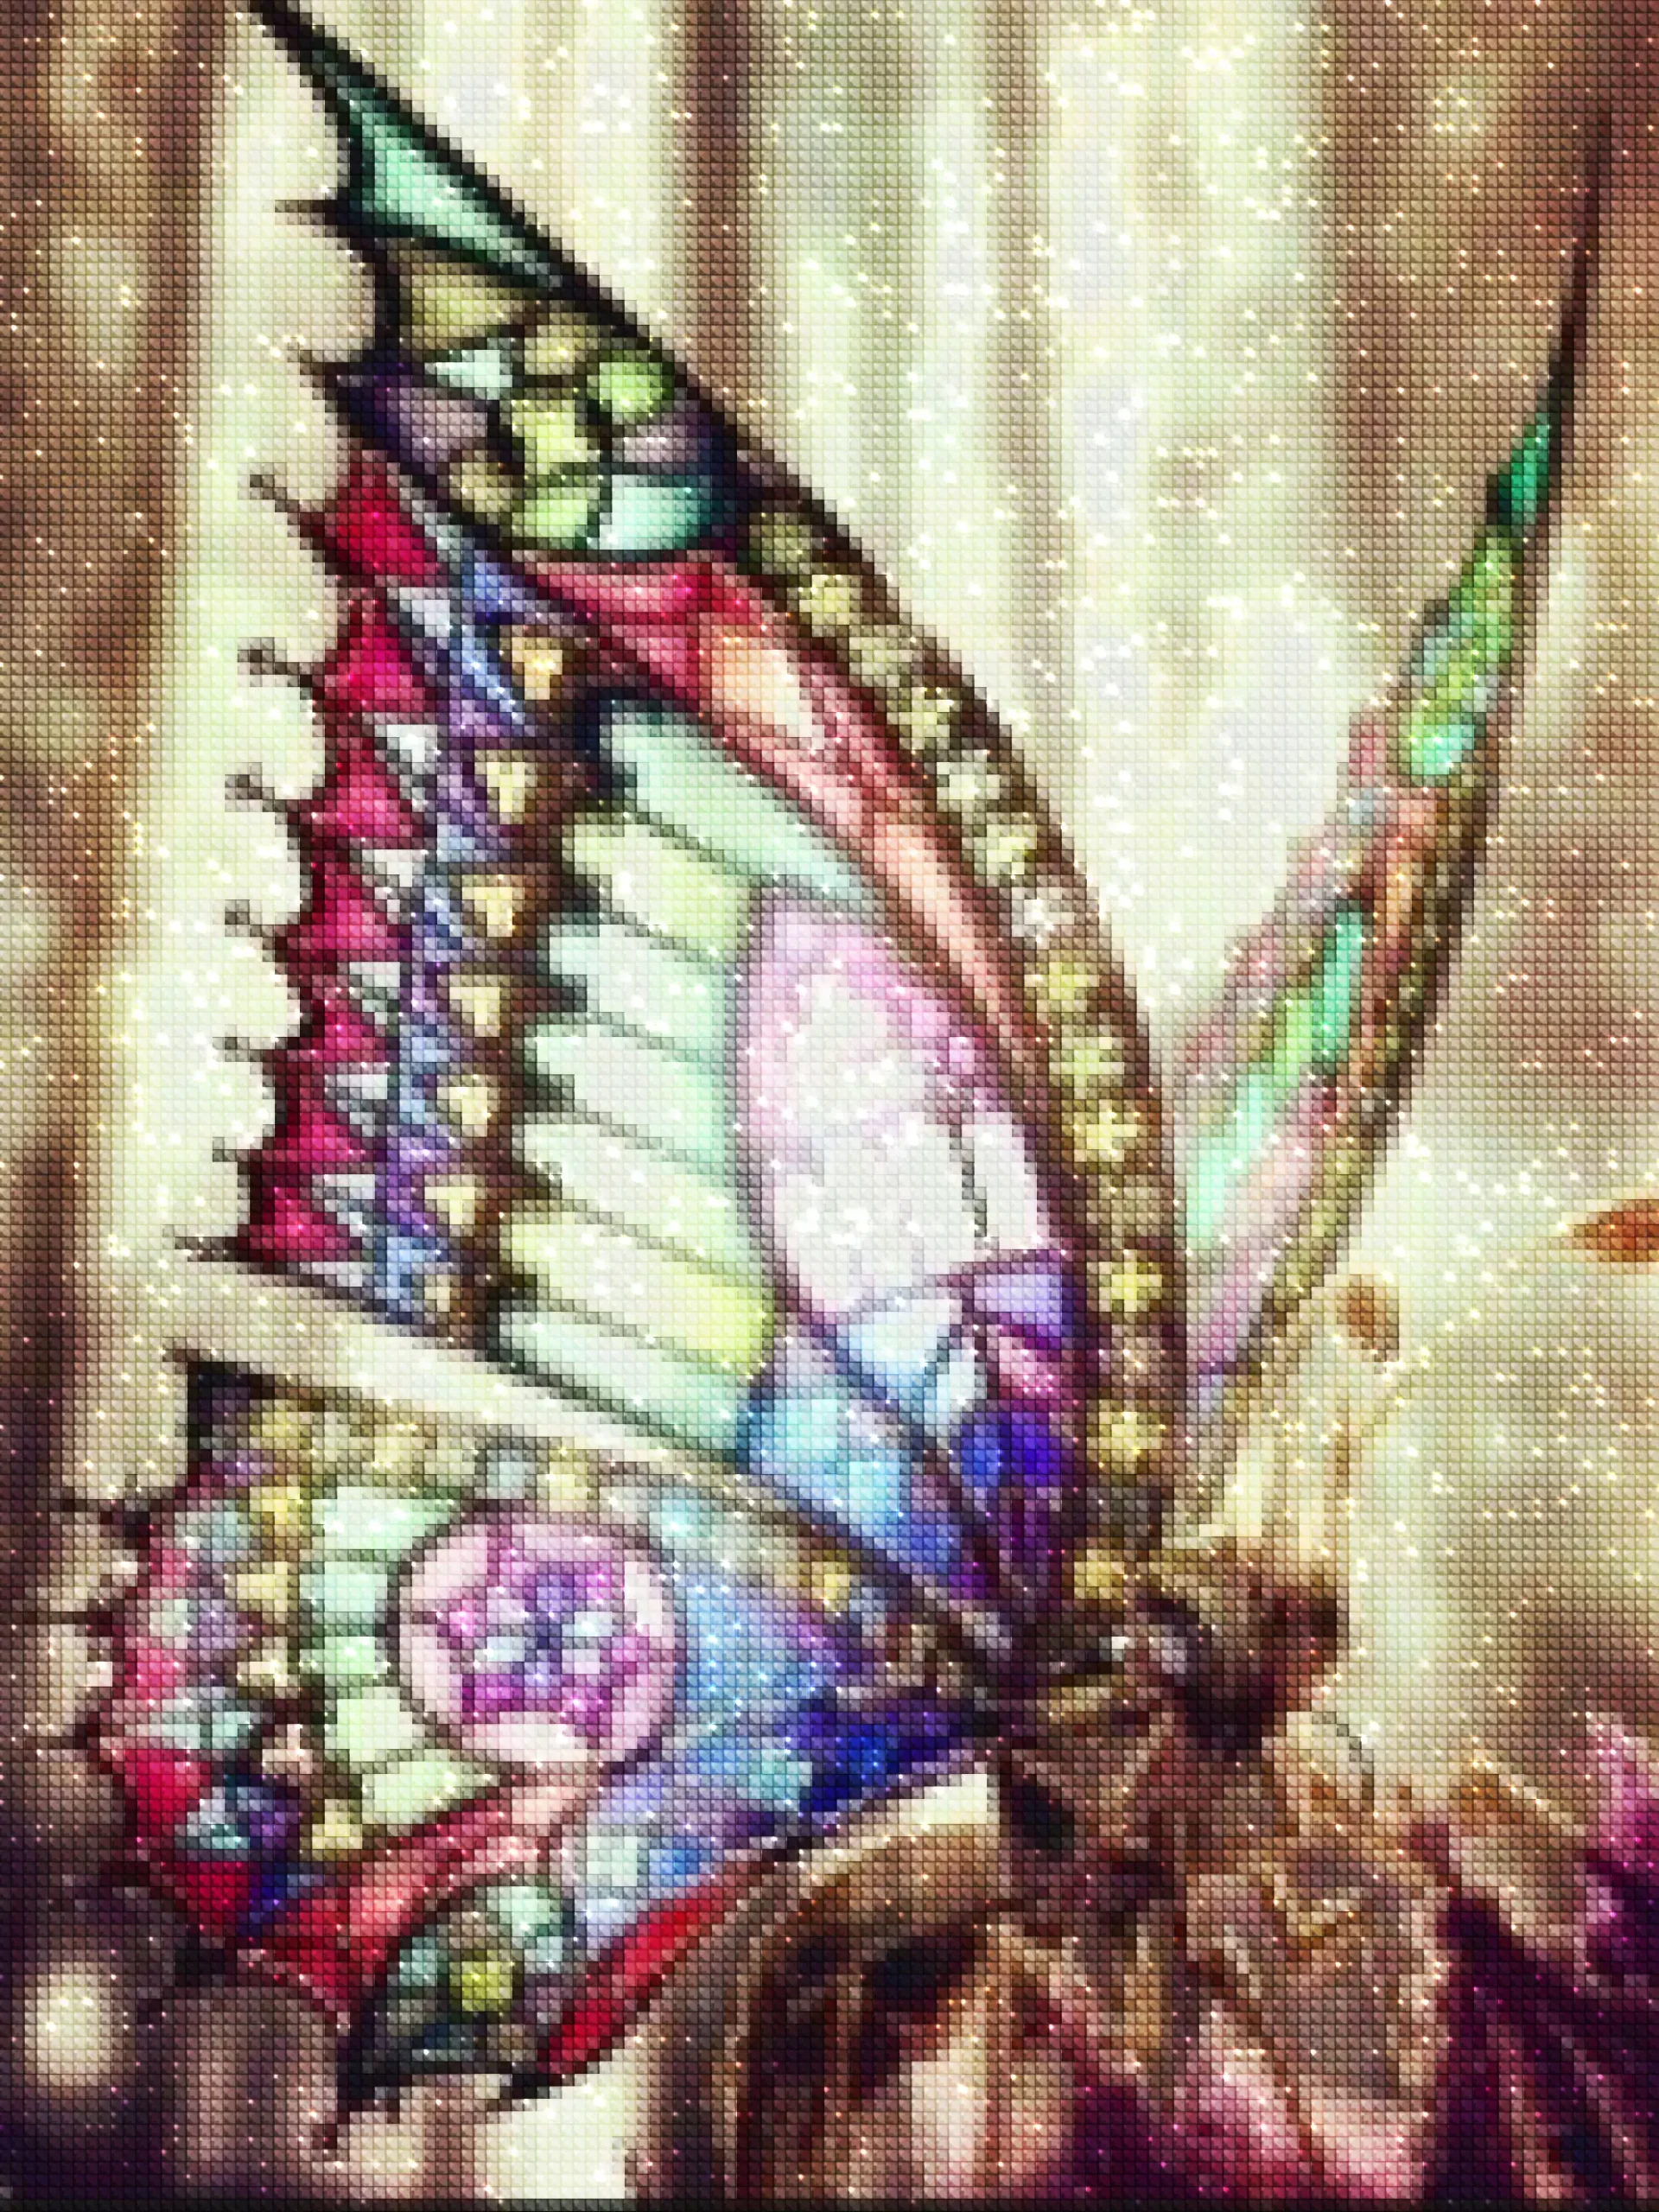 diamanten-zauberer-diamant-malerei-kits-Tiere-Schmetterling-Schmetterling mit Flügeln aus Buntglas-diamonds.webp